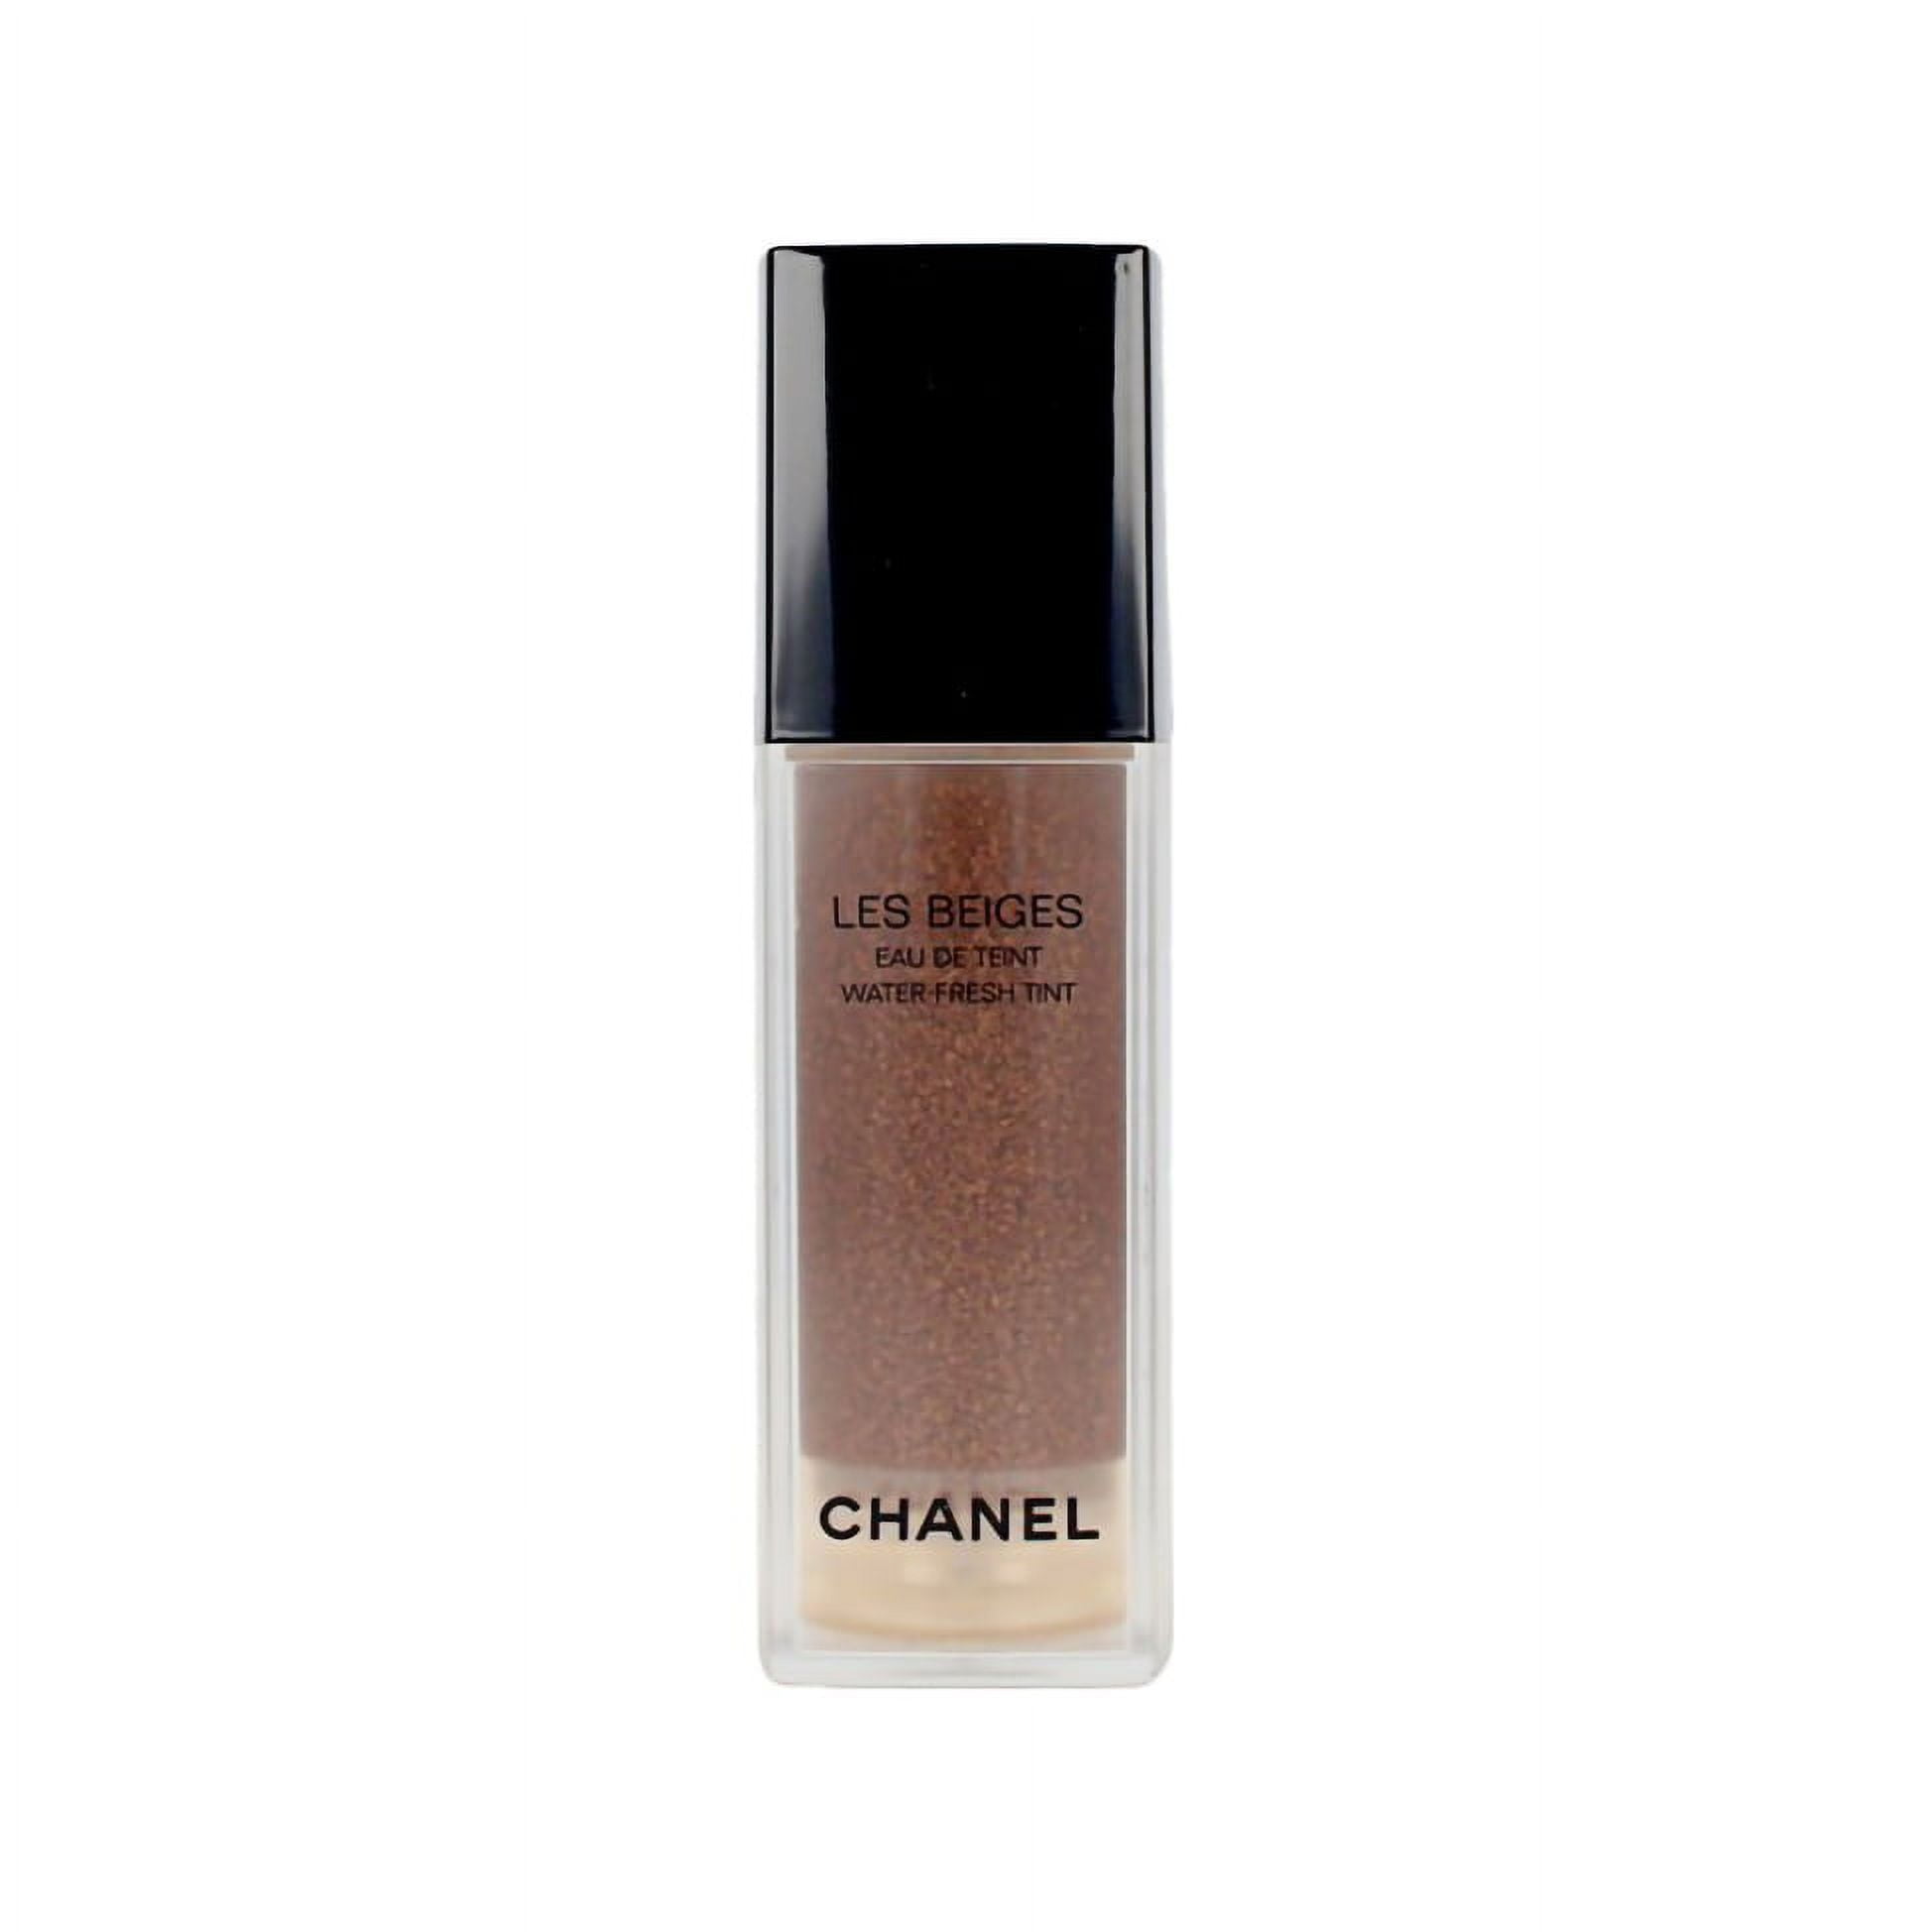 Chanel Les Beiges Water Fresh Tint - 158.860 Deep - 1.0 oz / 30 ml